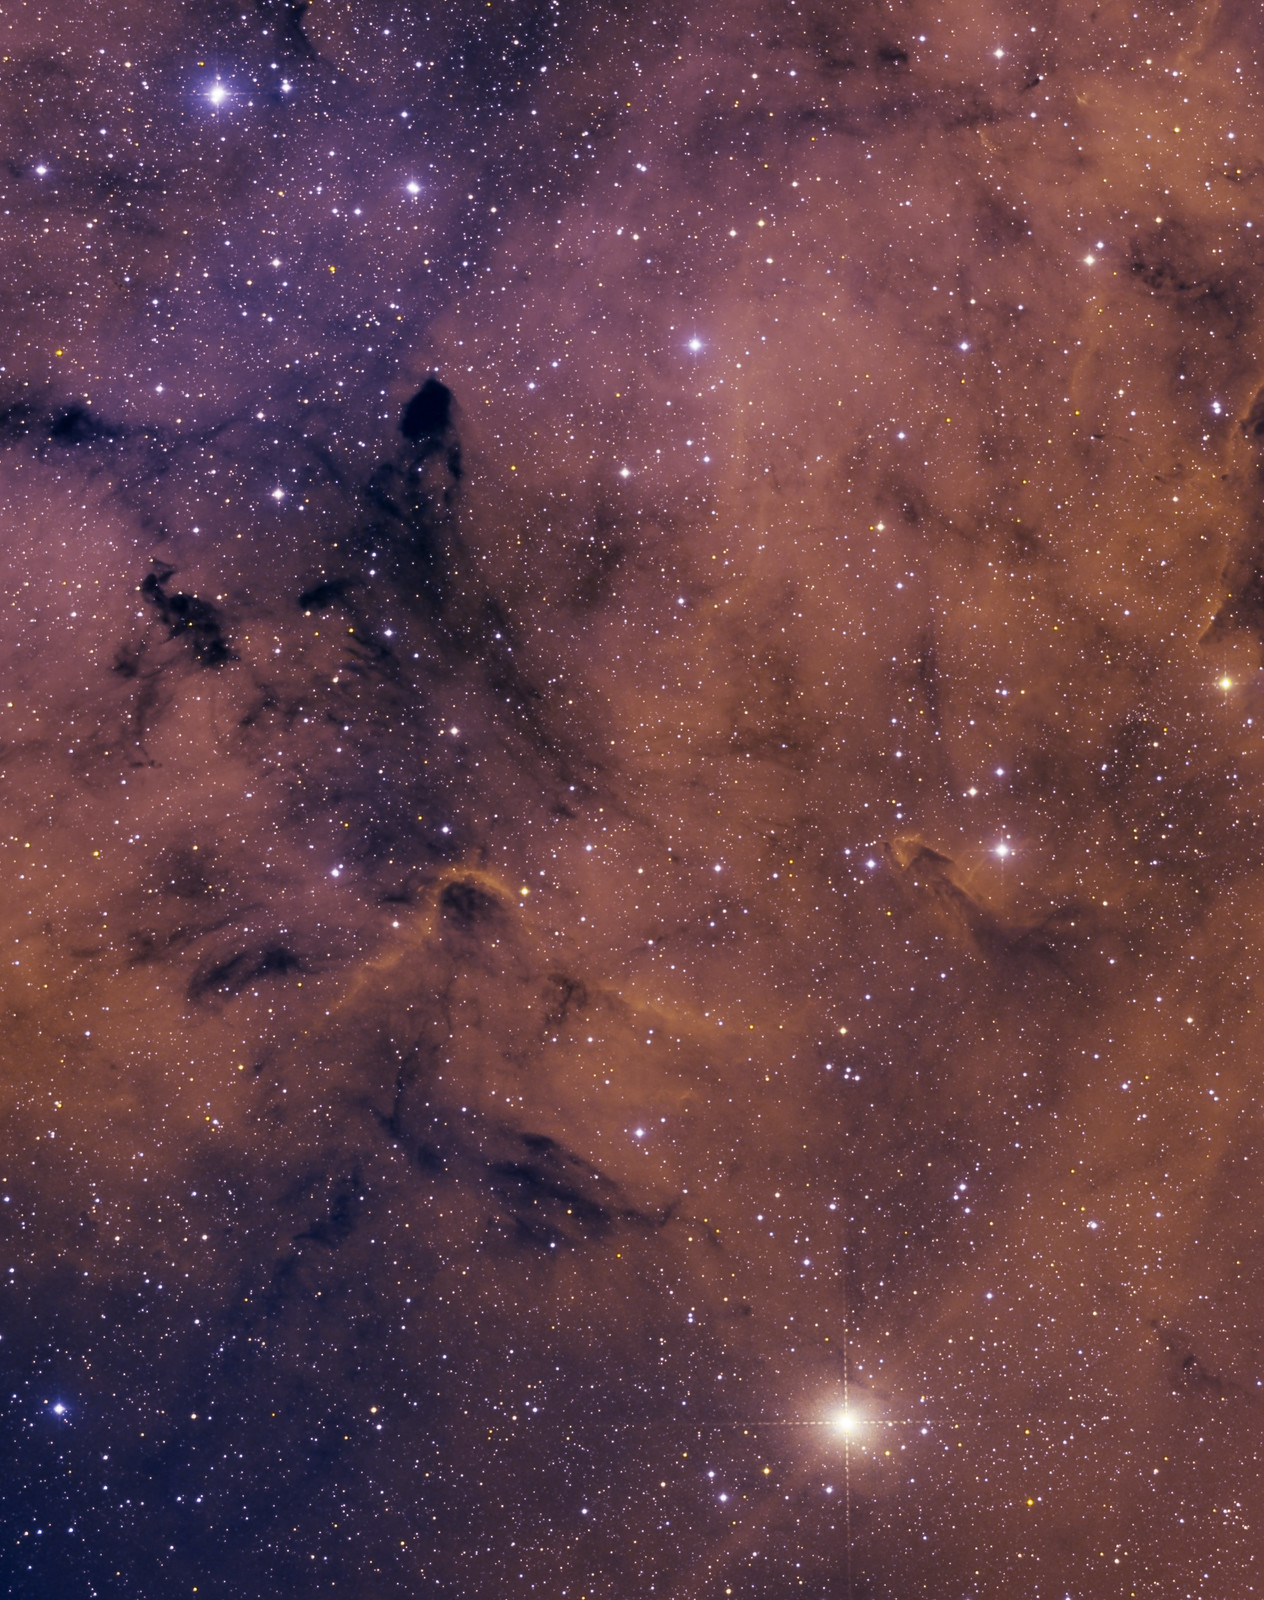 Mu Cephei (in basso a destra) e la nebulosa ad emissione IC1396 Crediti: Ginge Anvik https://www.flickr.com/photos/ginges/6274167794